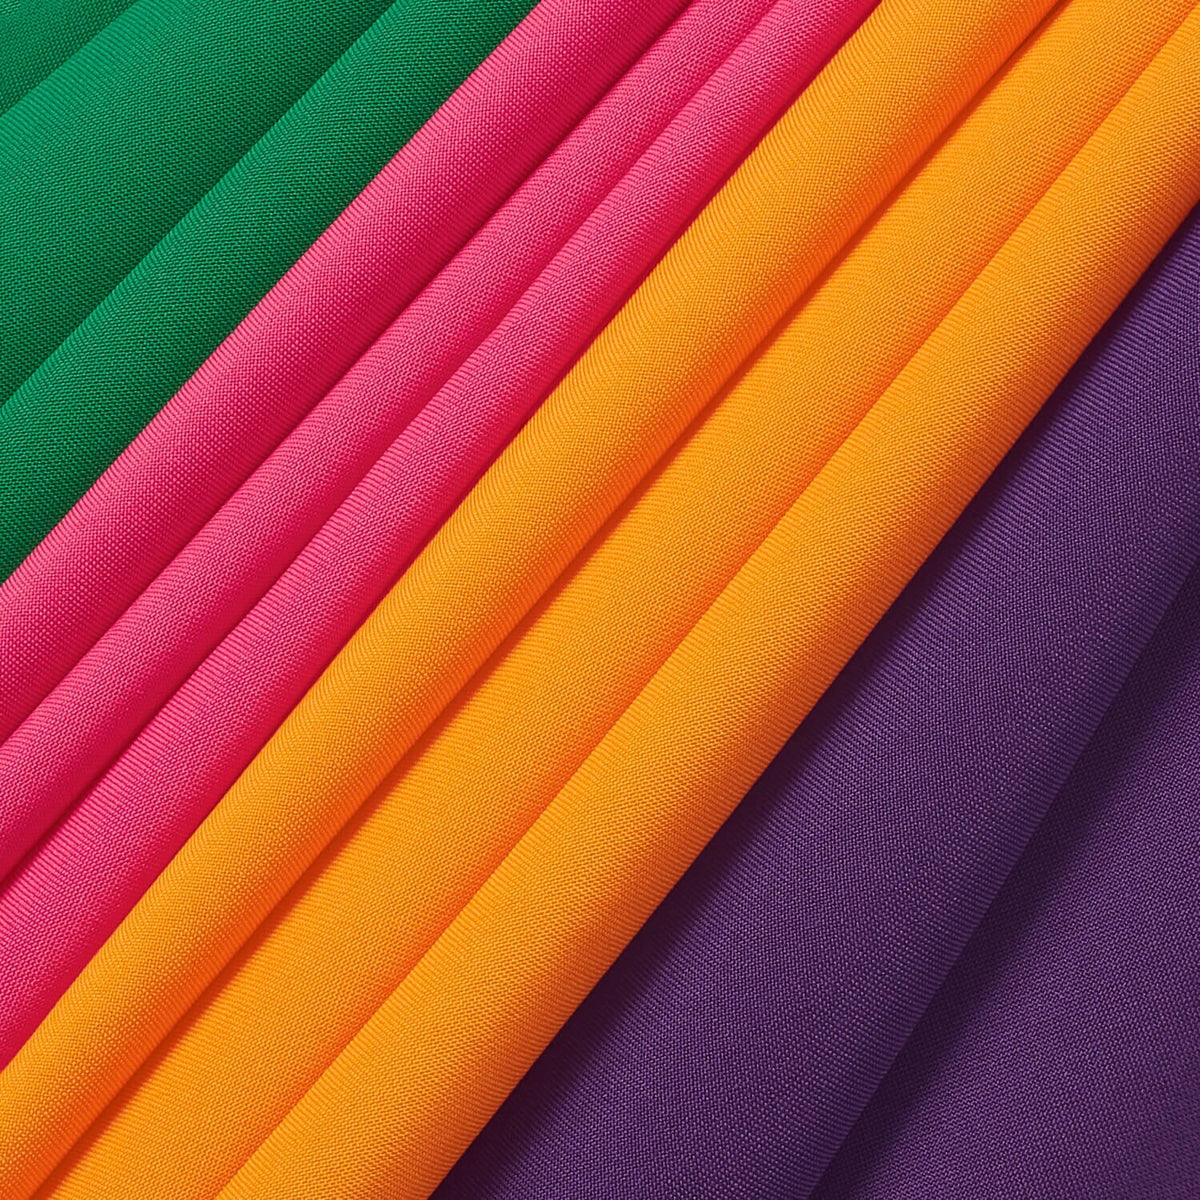 Fabric Wholesale Direct